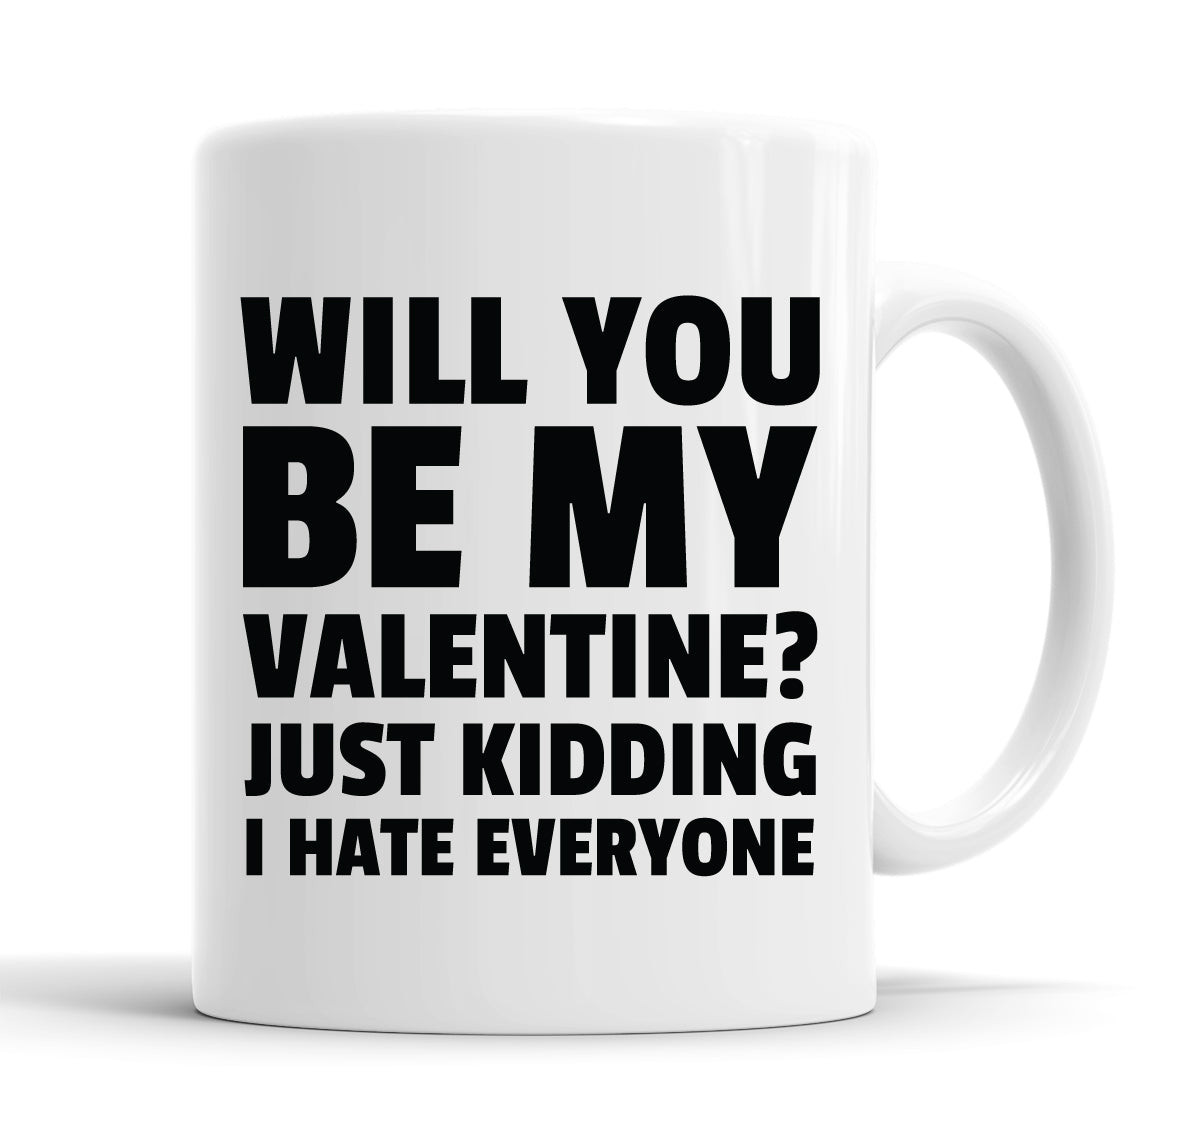 Will You Be My Valentine? Just Kidding, I Hate Everyone Funny Slogan Mug Tea Cup Coffee